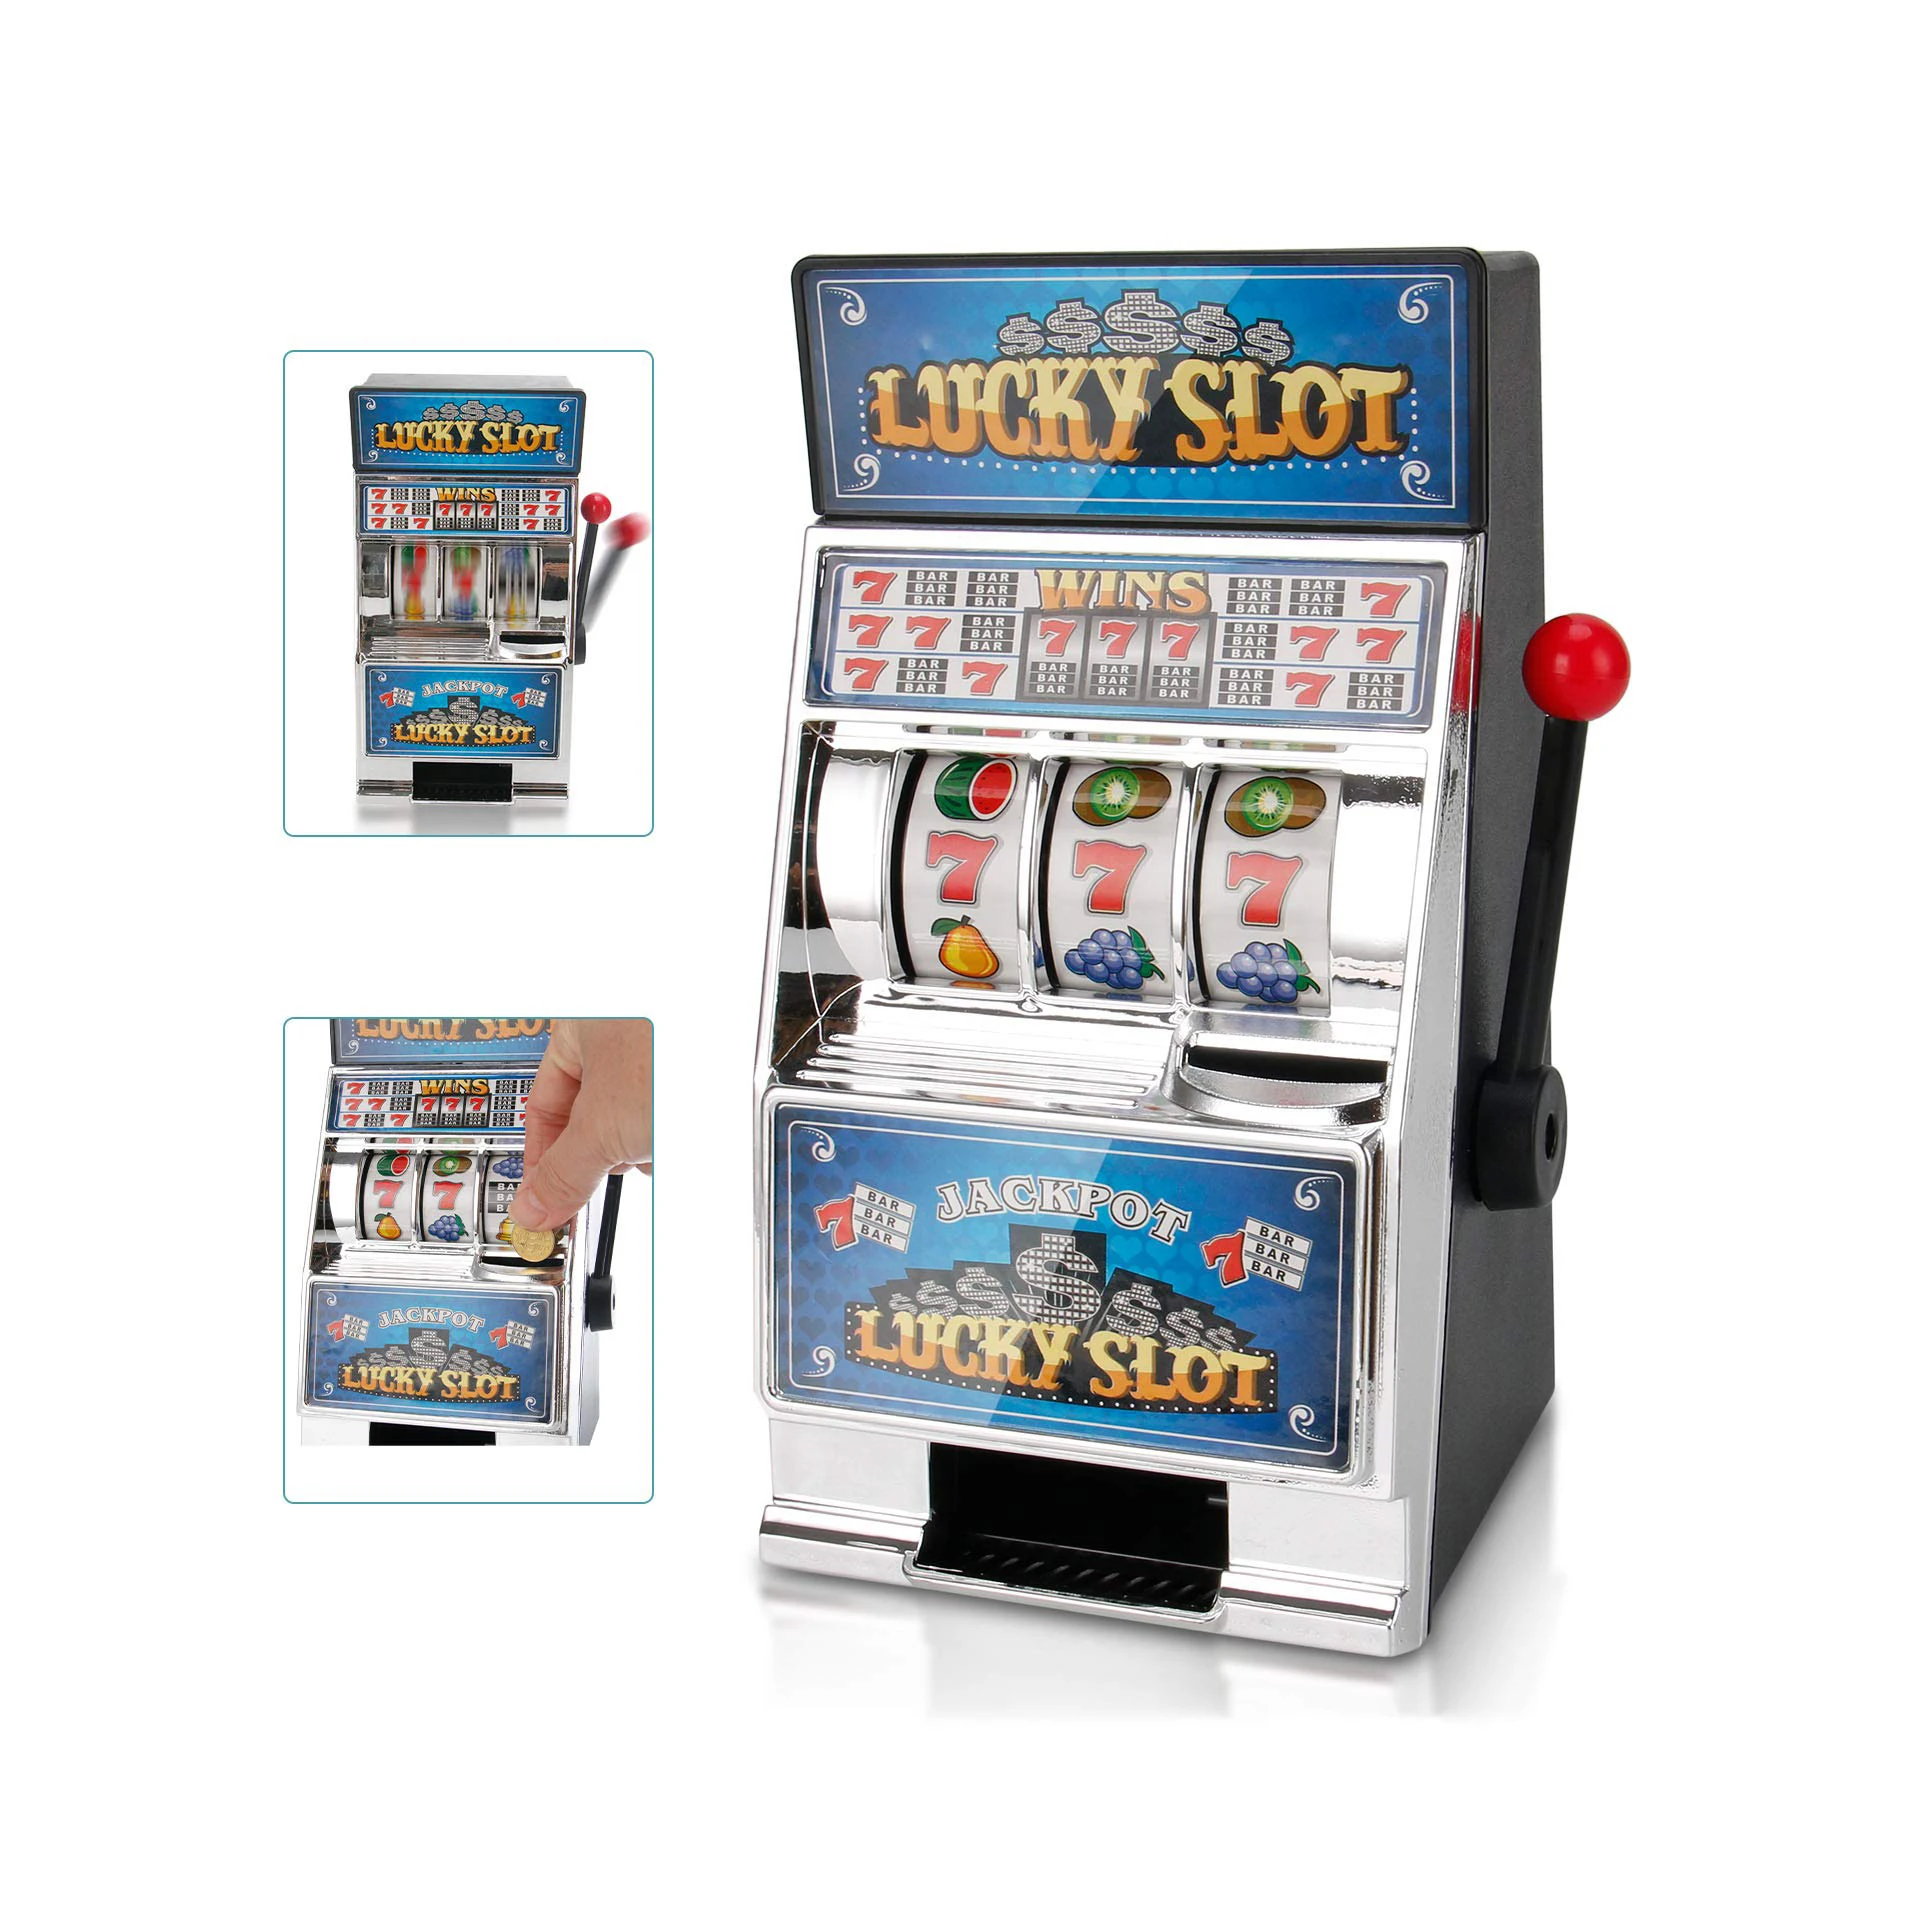 Real mini slot machines for sale